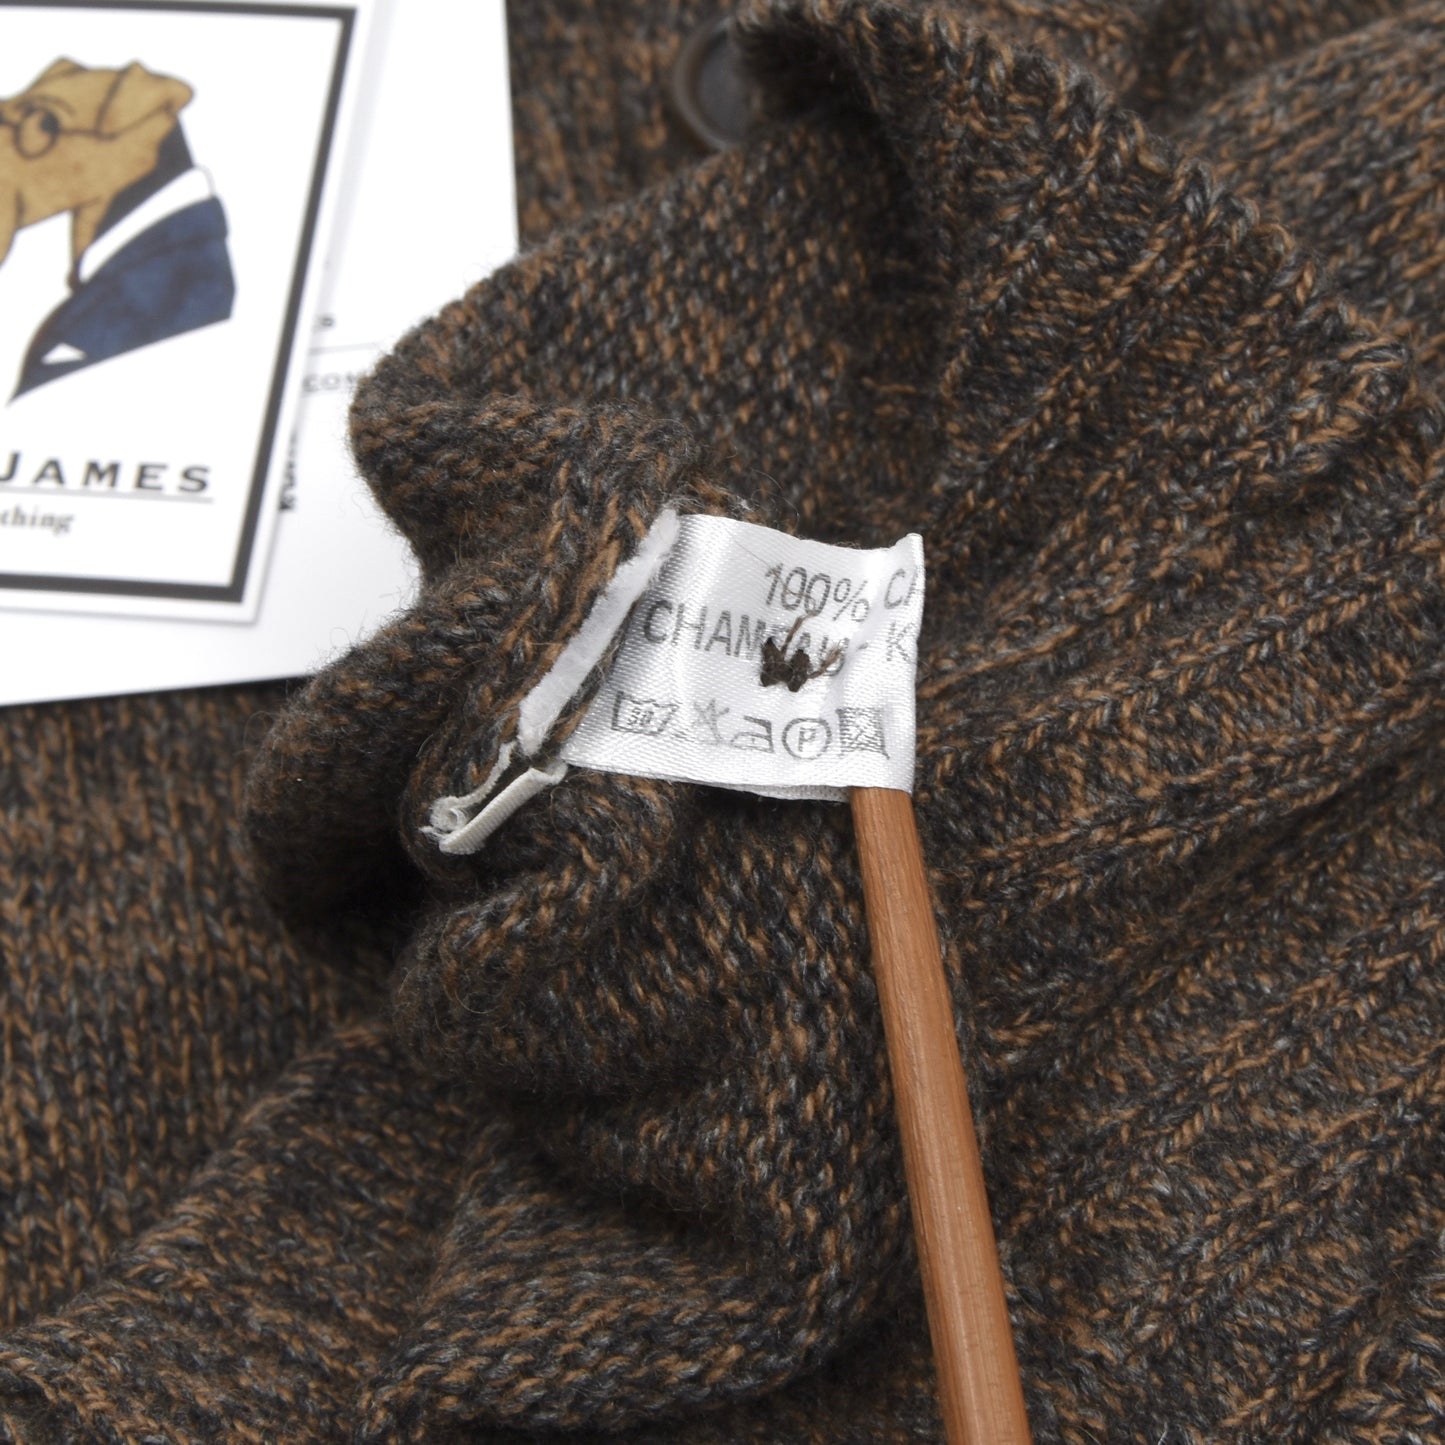 Falcconeri 100% Camel Hair Cardigan Sweater Size 56 - Brown